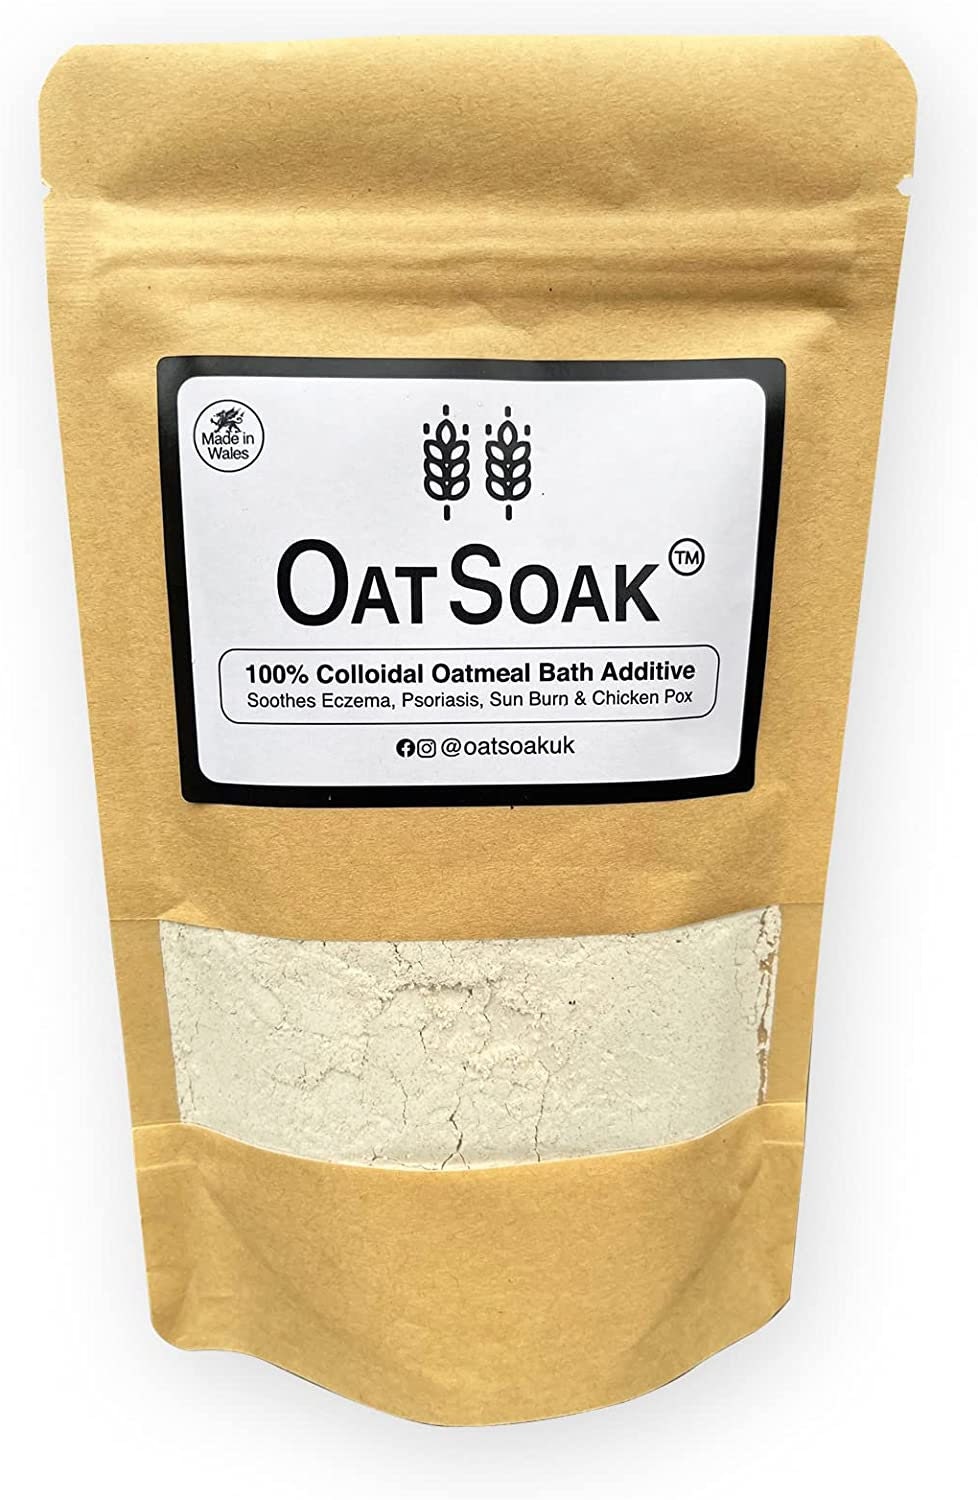 How To Make ￼ Colloidal Oatmeal 